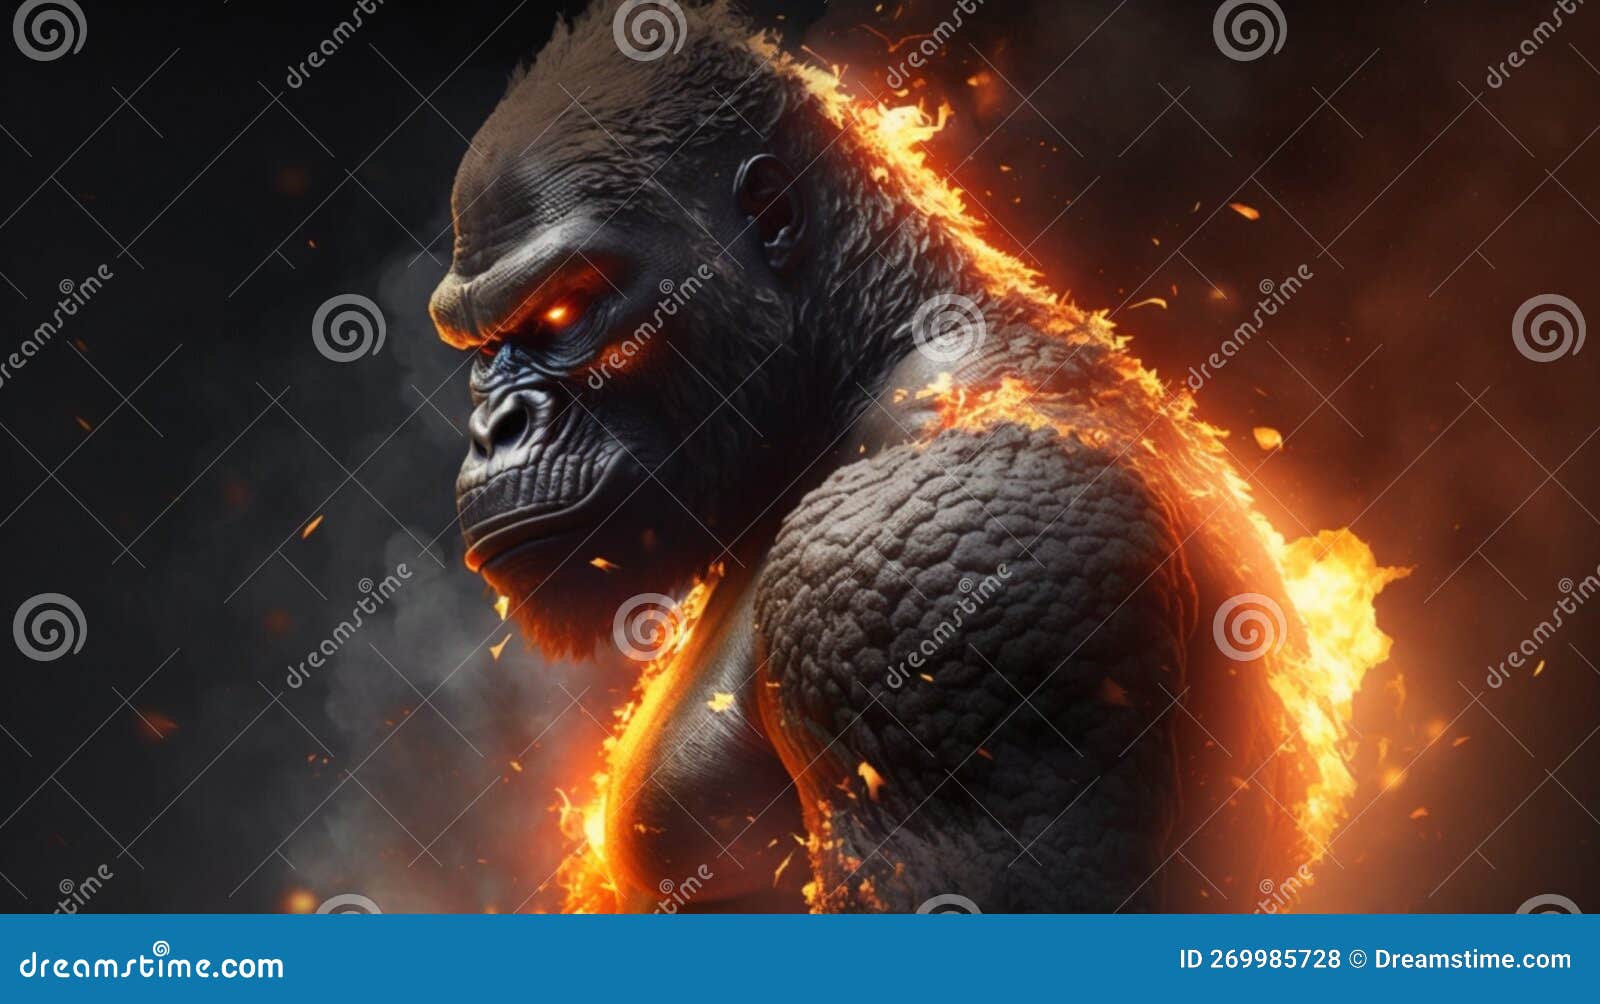 Angry Fire Gorilla Illustration Stock Illustration - Illustration of ...